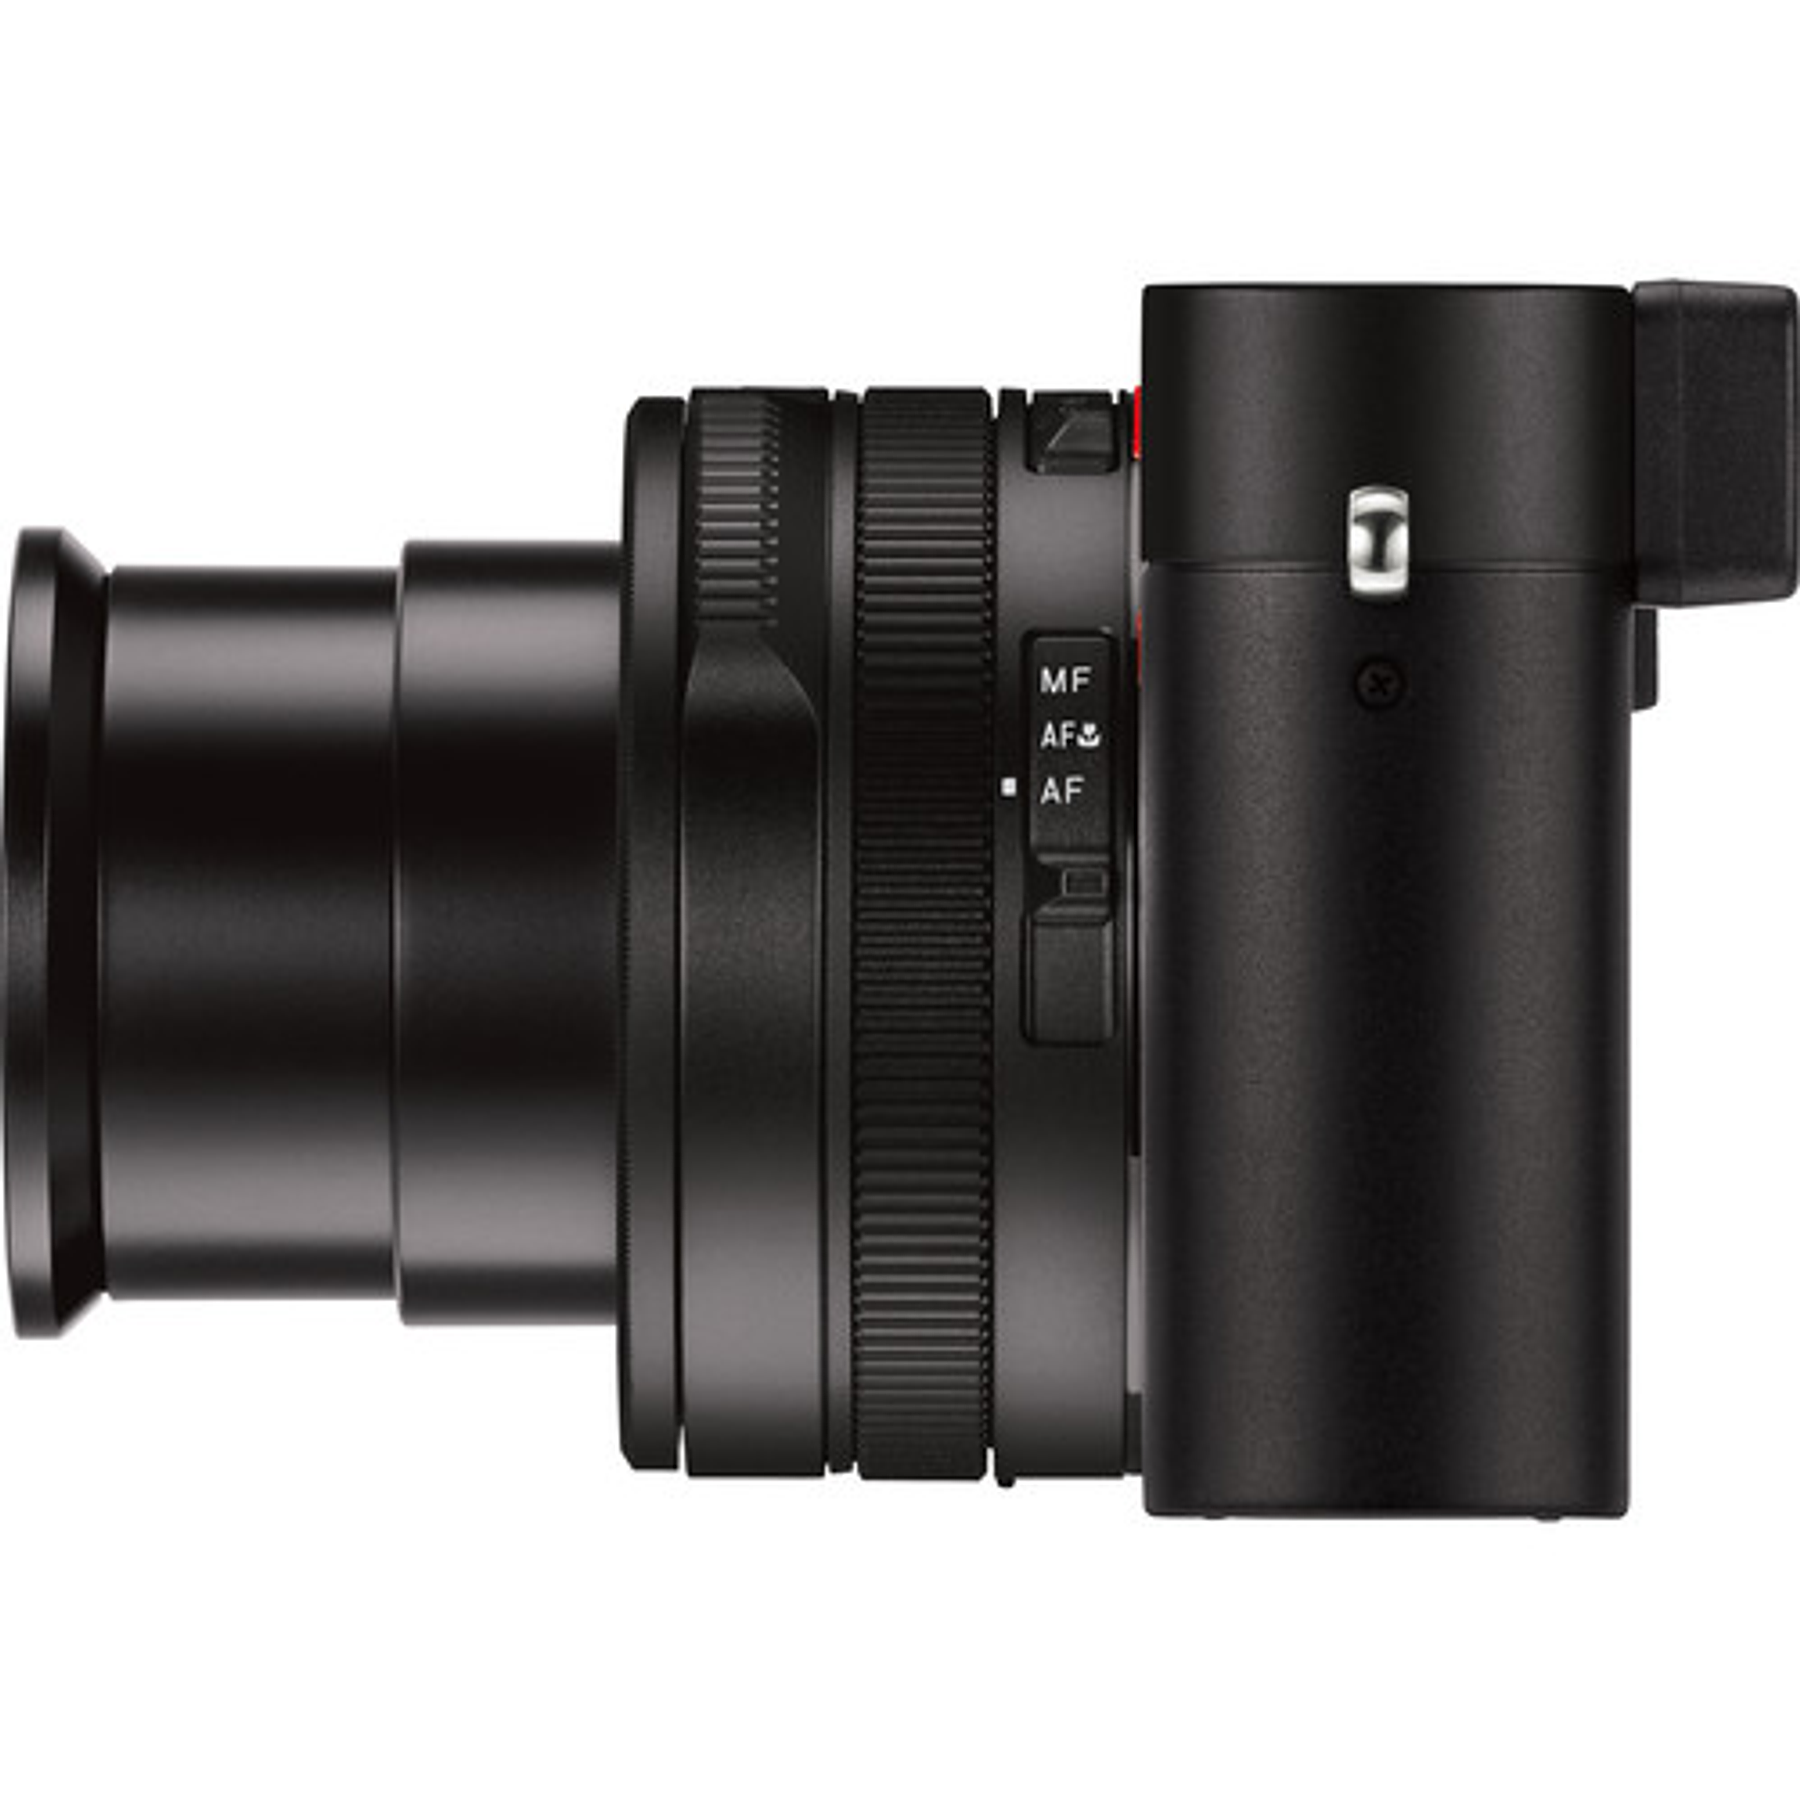 Cámara digital Leica D-Lux 7 Negro